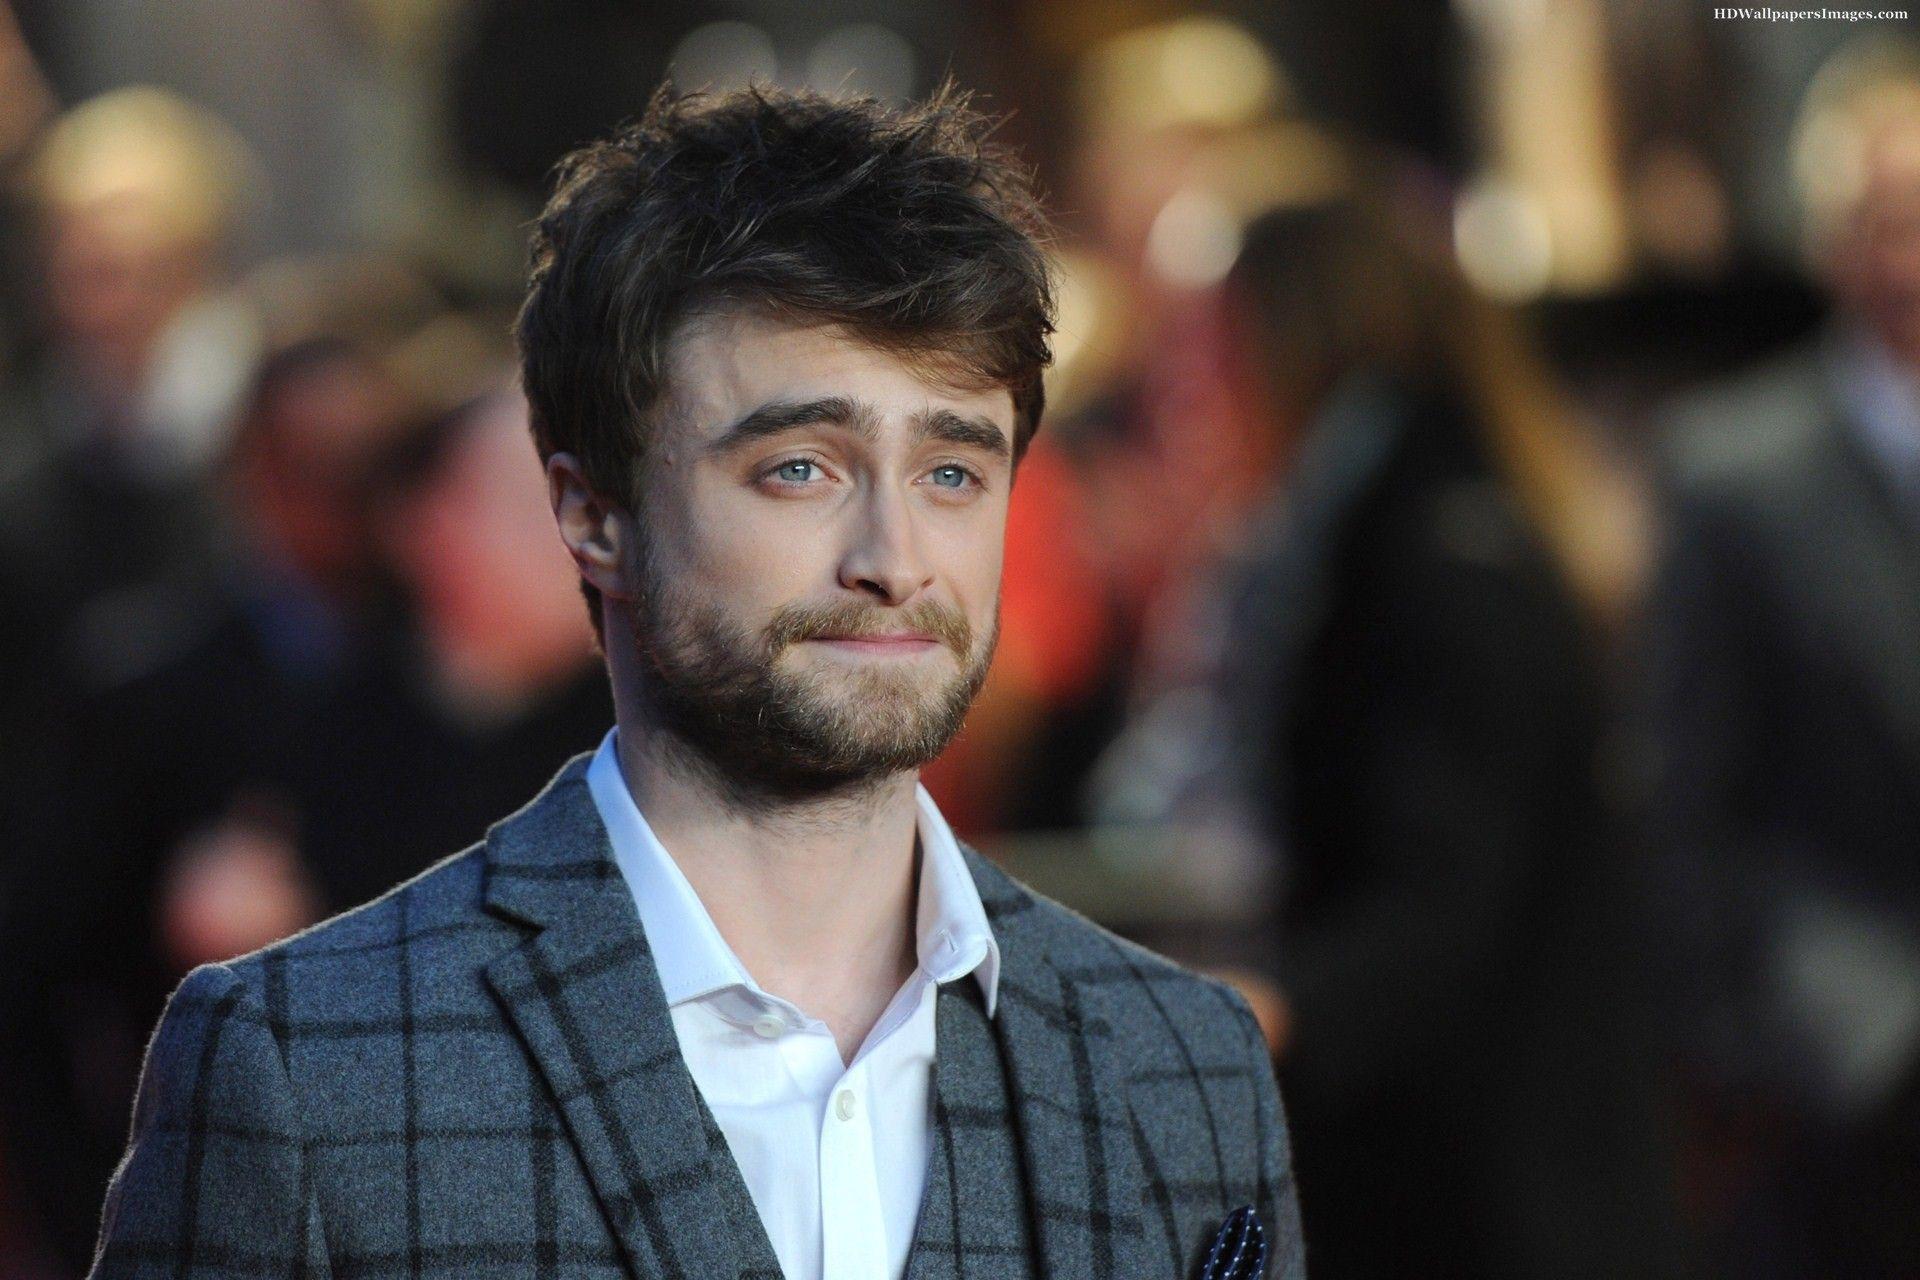 Daniel Radcliffe 2015 Image. HD Wallpaper Image